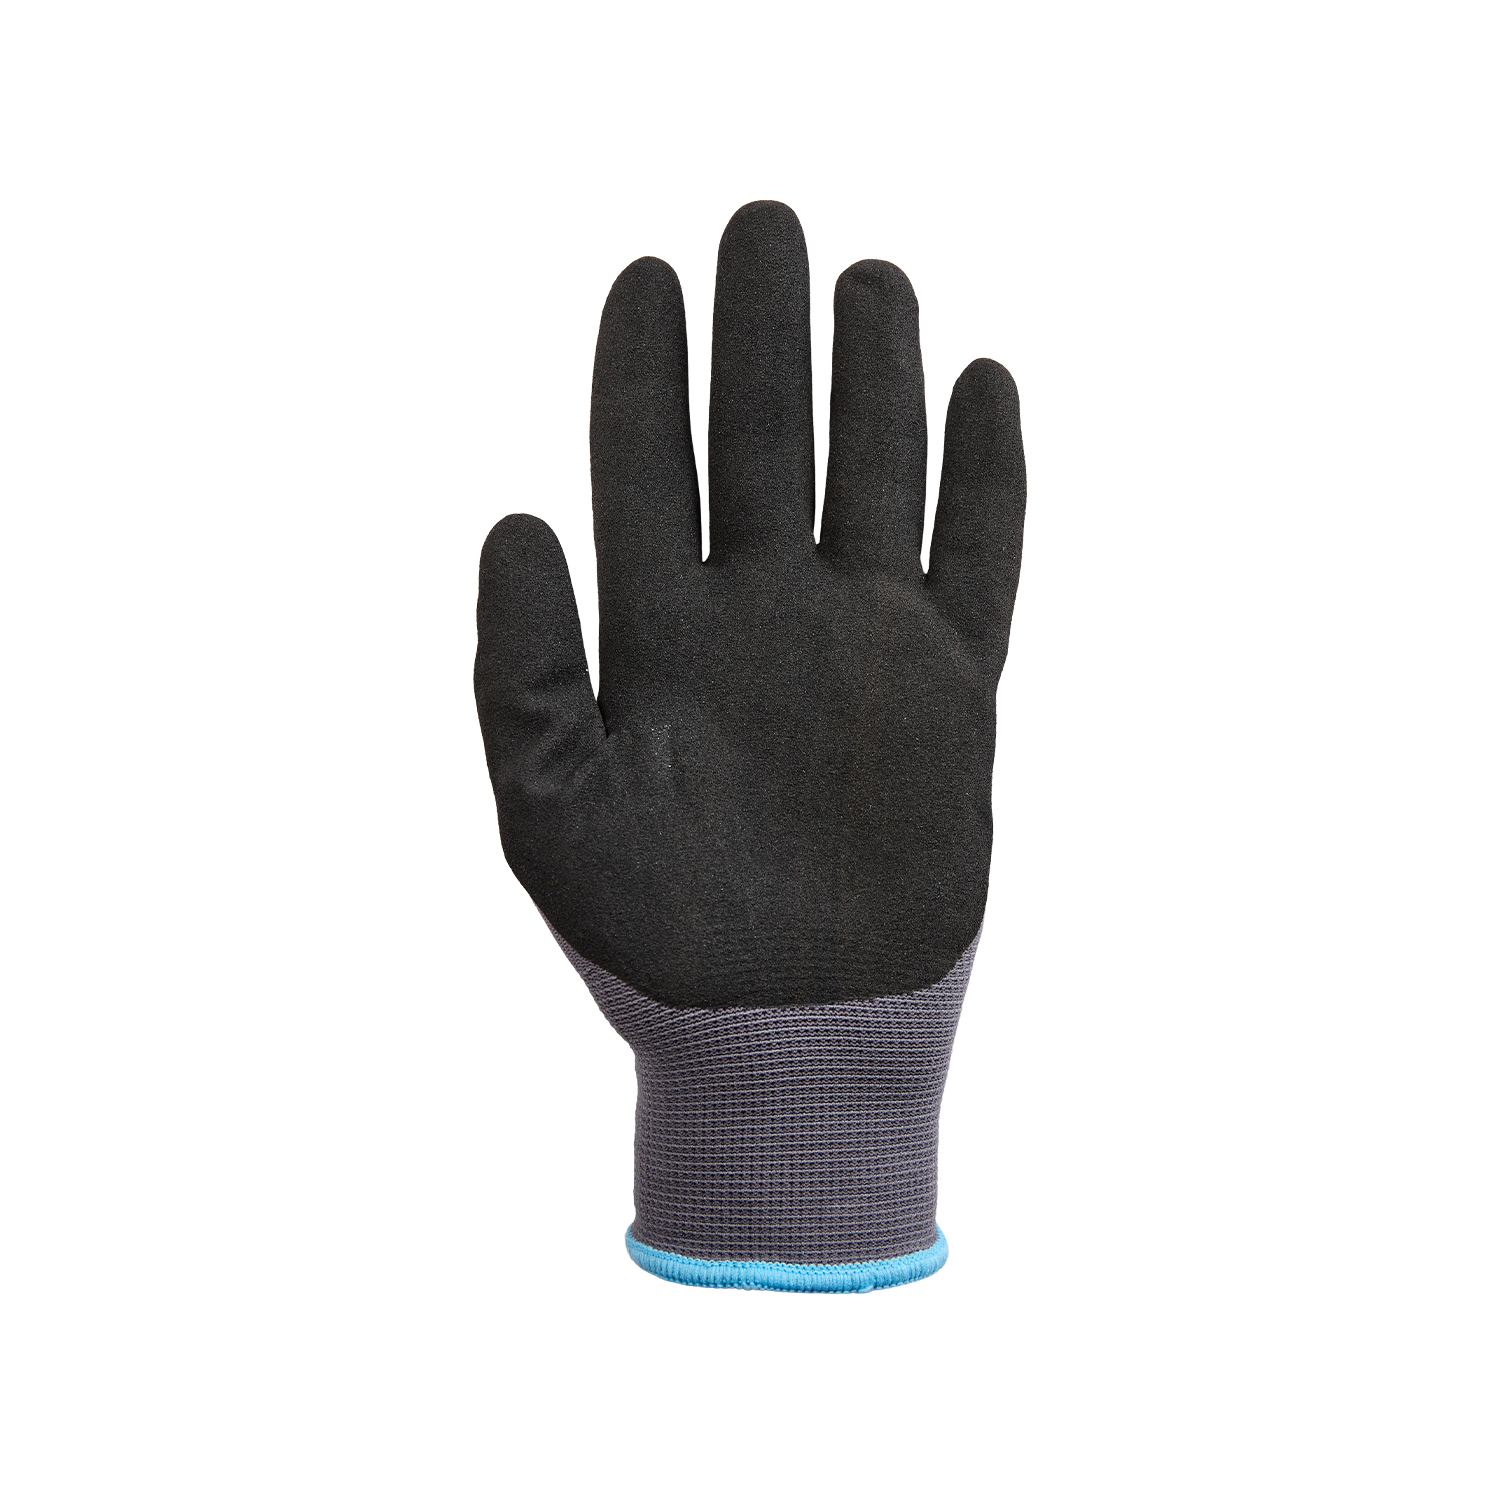 NORSE Flex Original assembly gloves size 11